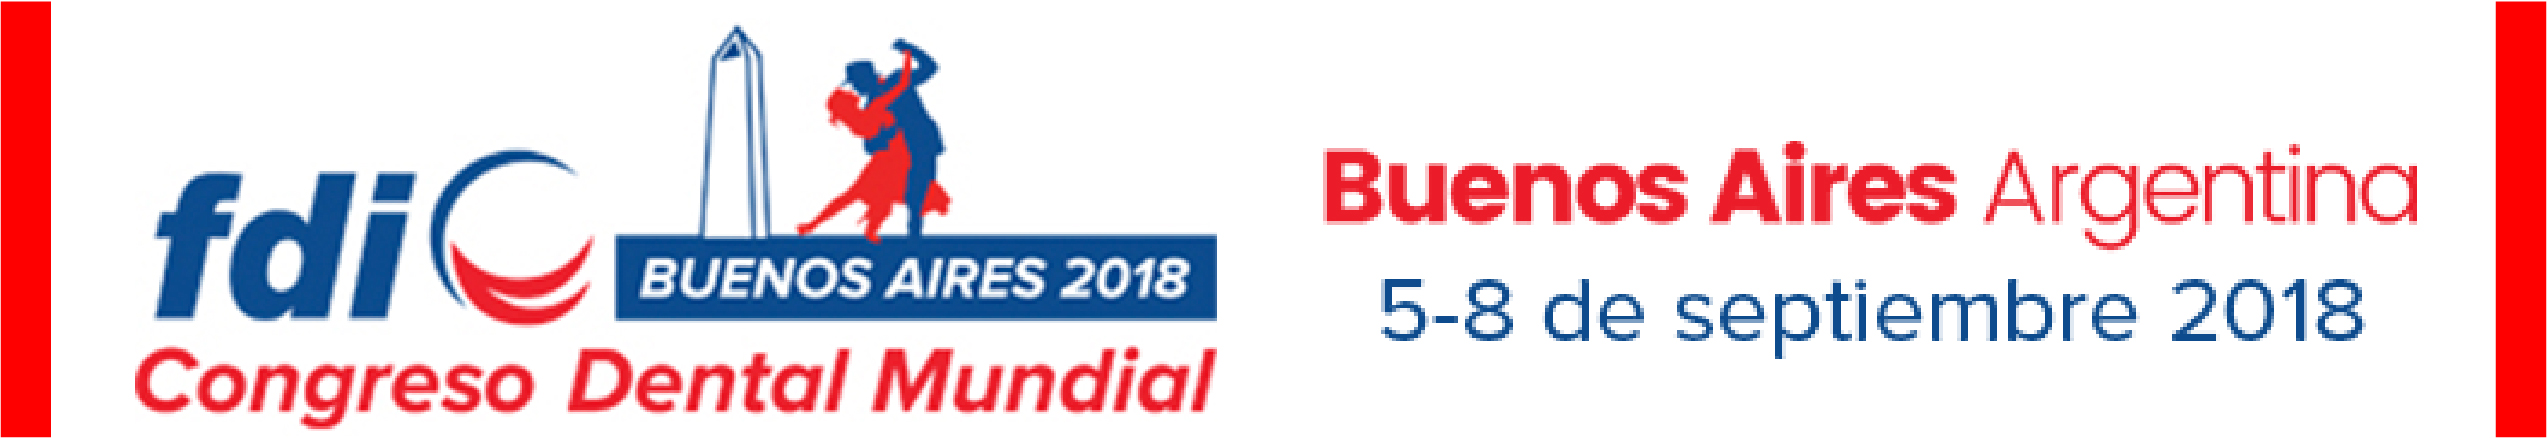 FDI - Congreso Dental Mundial 2018 - Buenos Aires (Argentina)